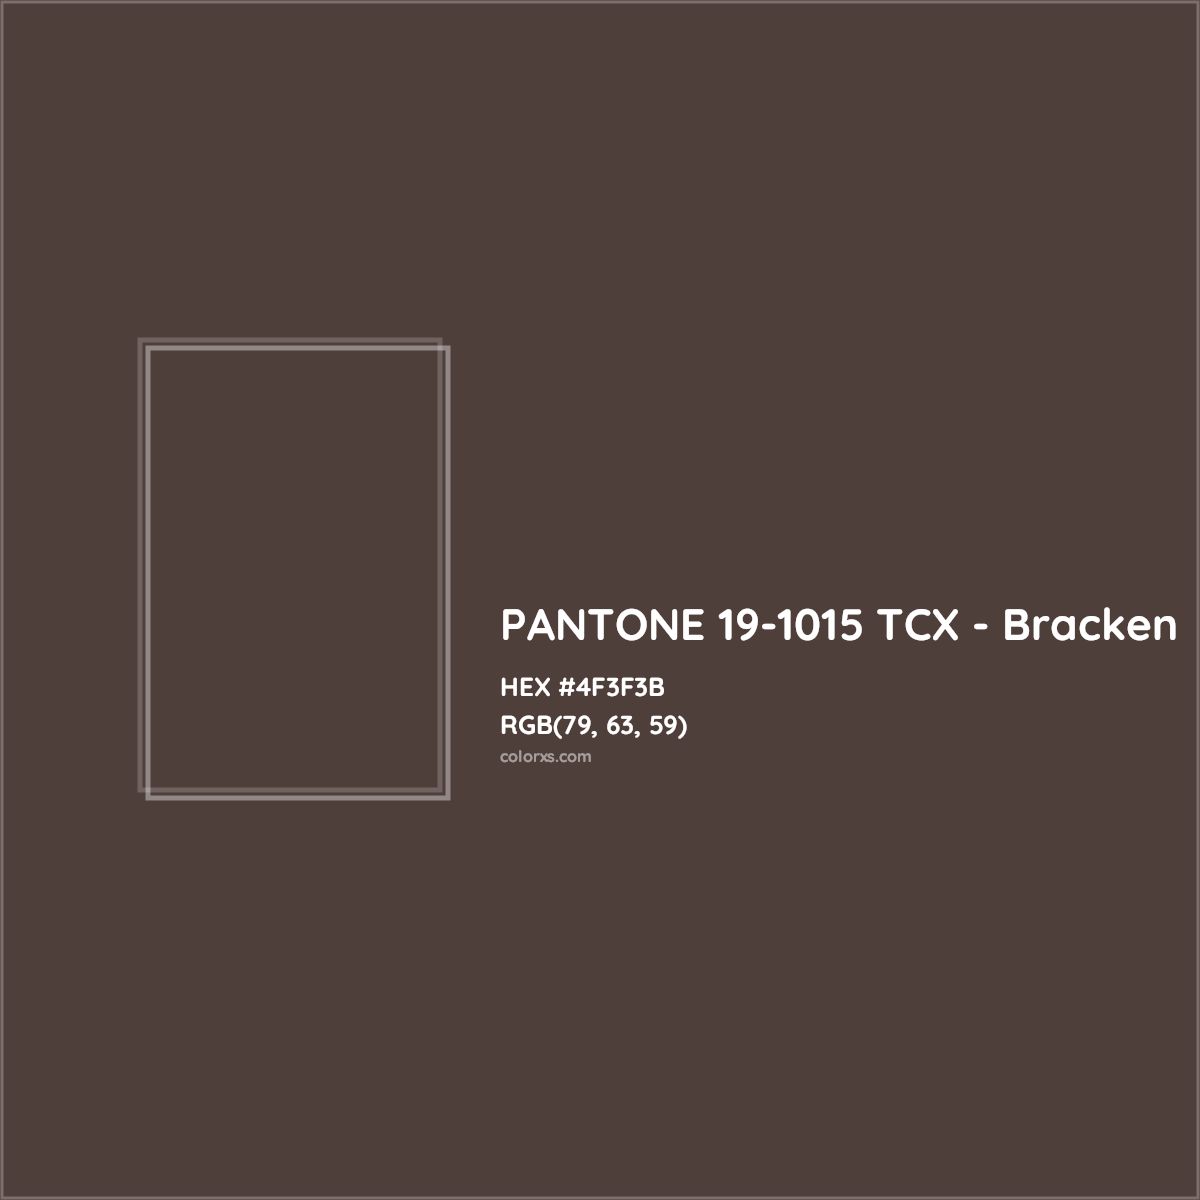 HEX #4F3F3B PANTONE 19-1015 TCX - Bracken CMS Pantone TCX - Color Code